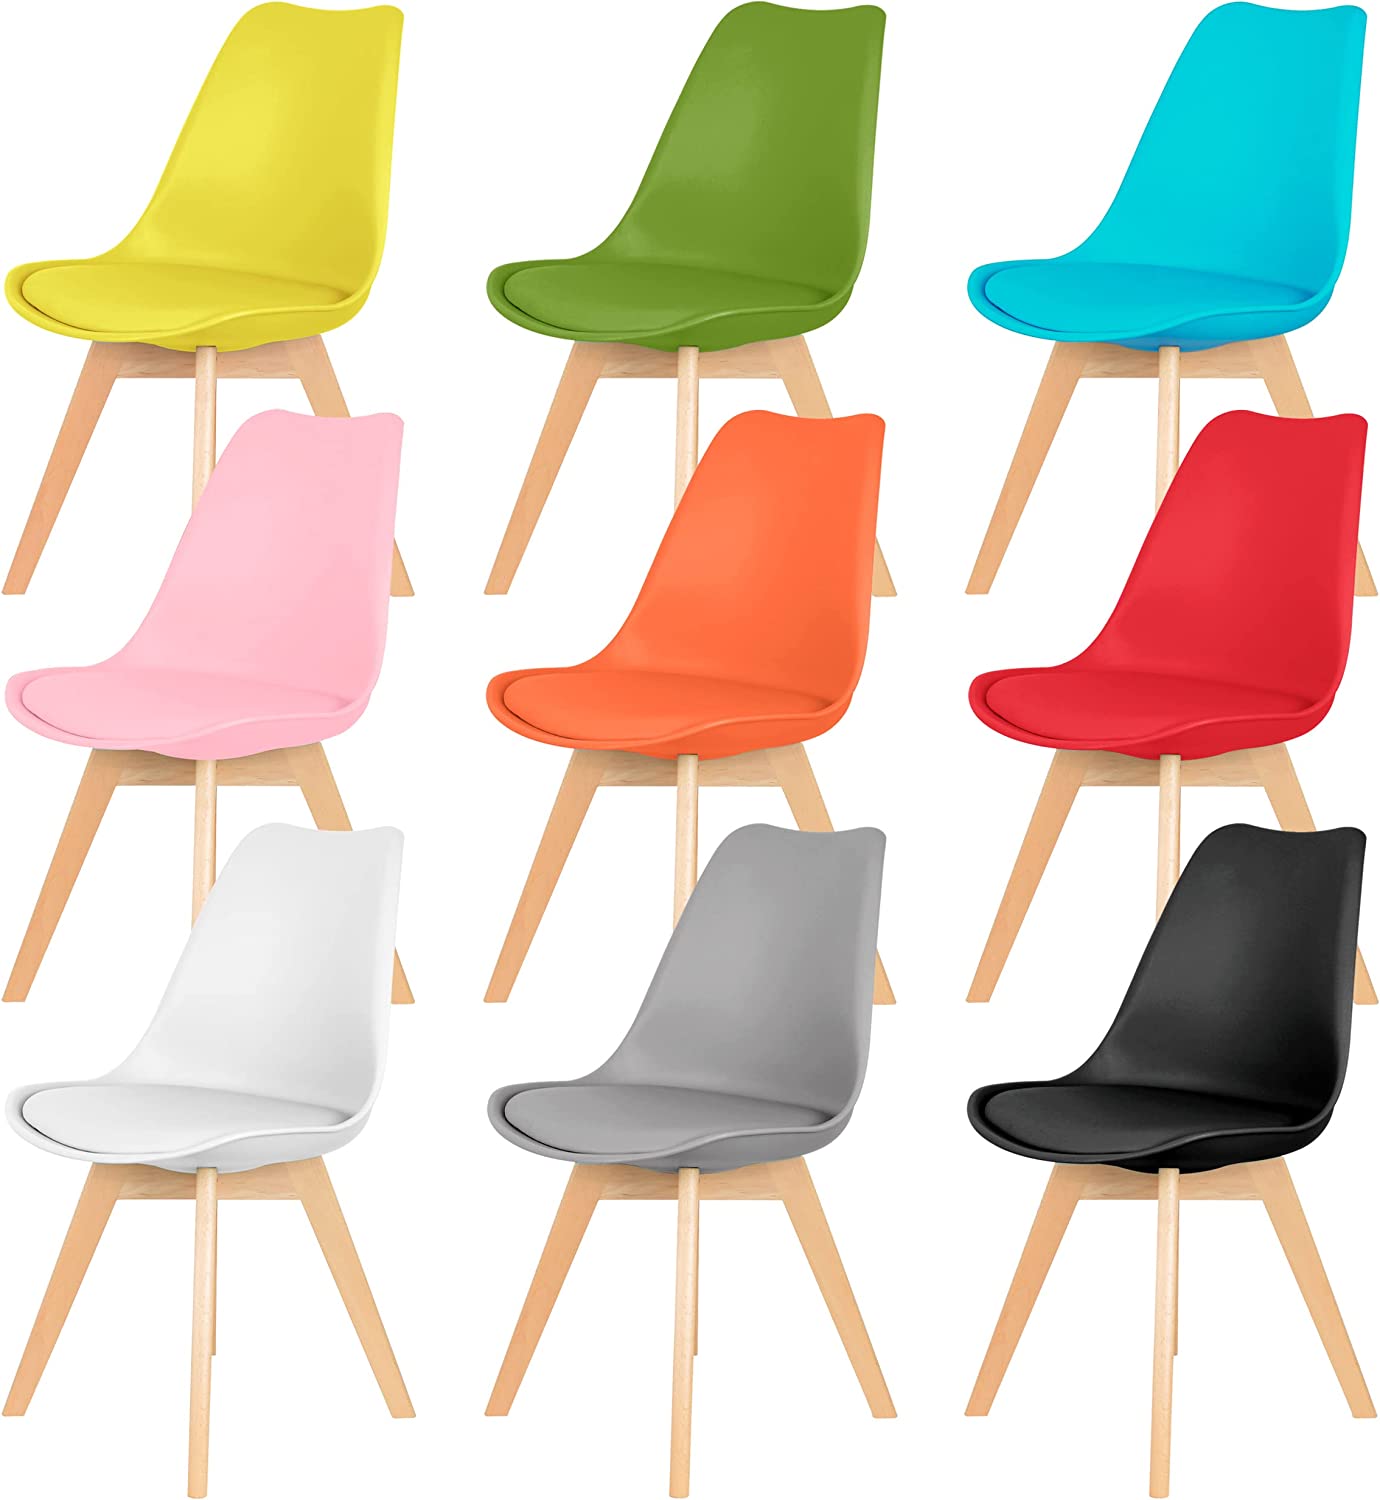 Distinct Designs Classic Mid-Century Design Dining Office Chair in durable Pink PP Plastic-Distinct Designs (London) Ltd